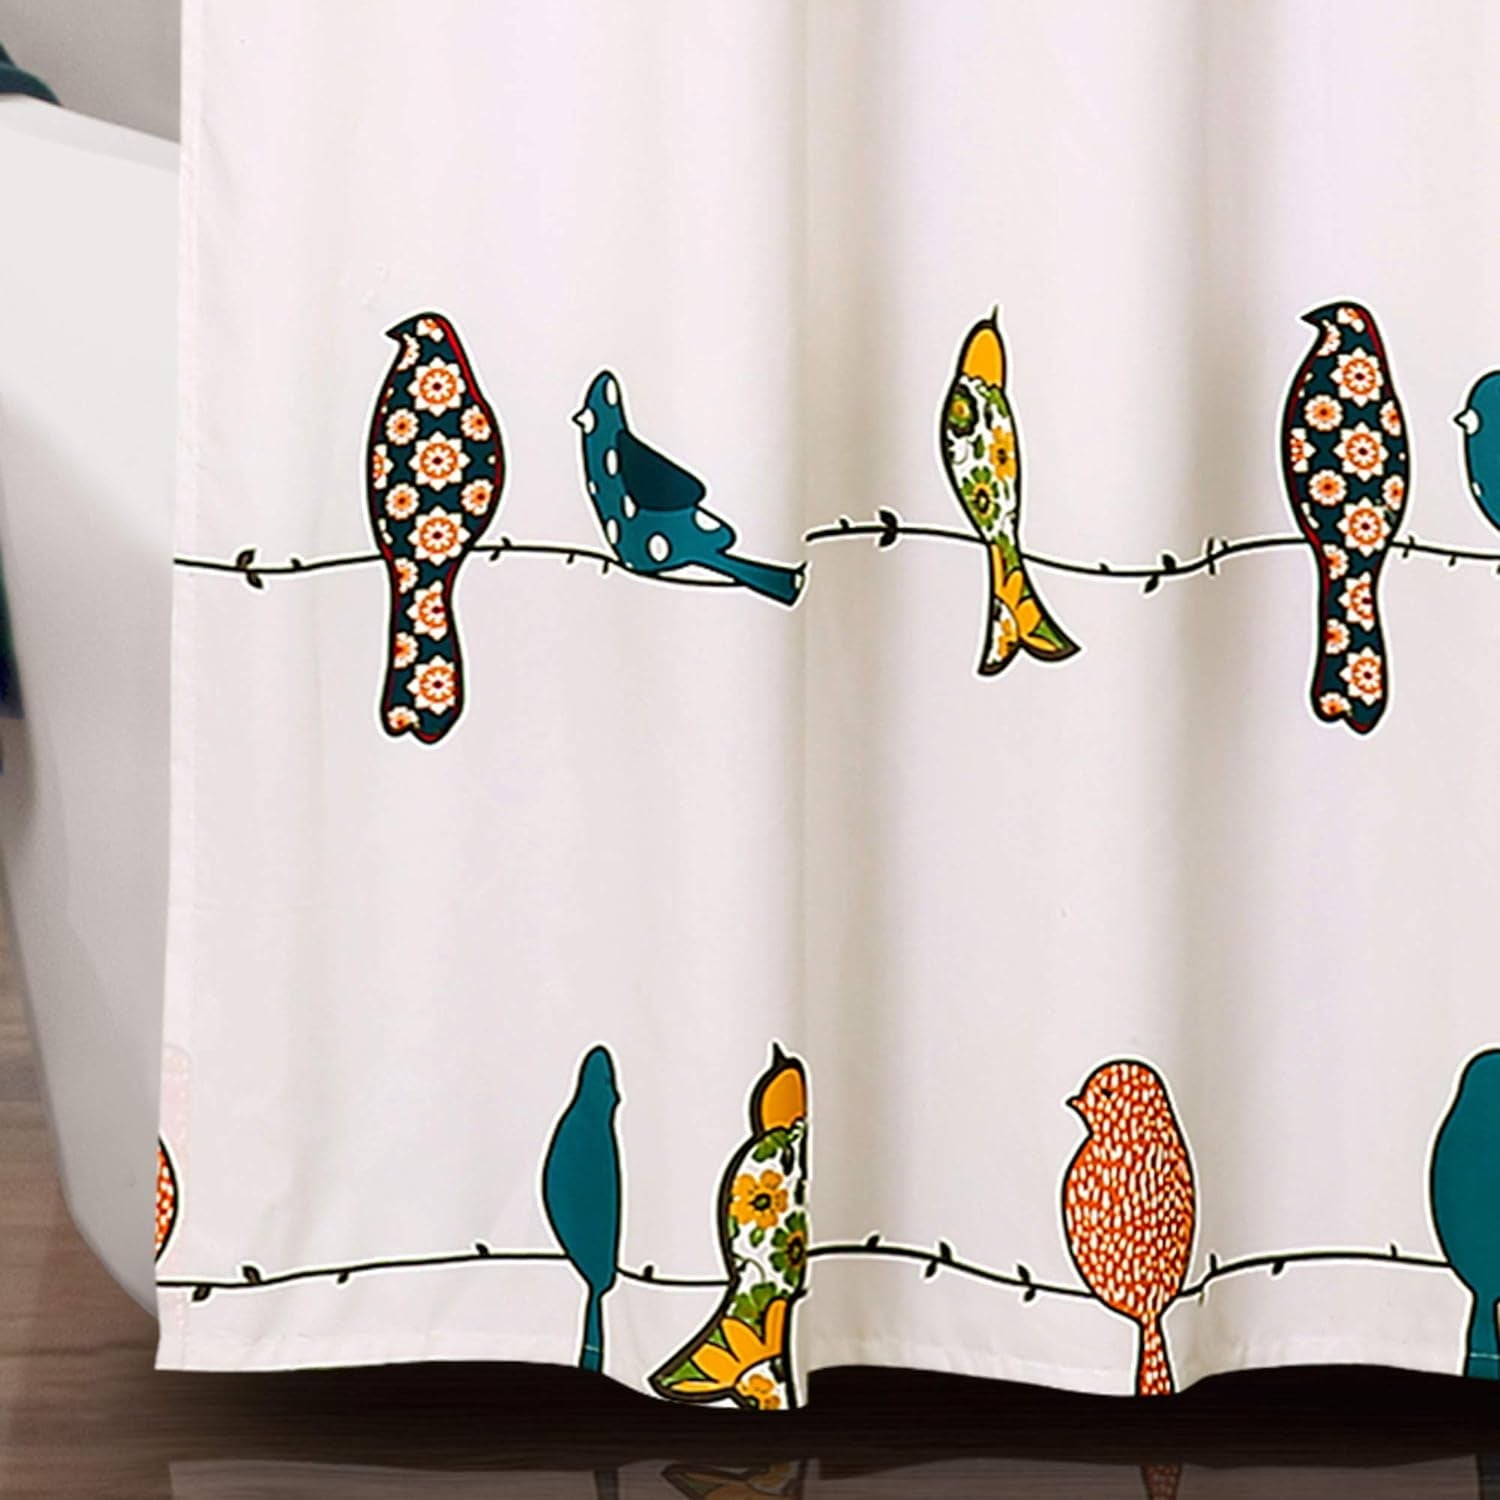 Lush Decor Rowley Birds Shower Curtain, 72” W X 72” L, Multi - Colorful Floral Bird Pattern - Whimsical & Playful Bird Shower Curtain - Farmhouse, Coastal, & Boho Bathroom Decor